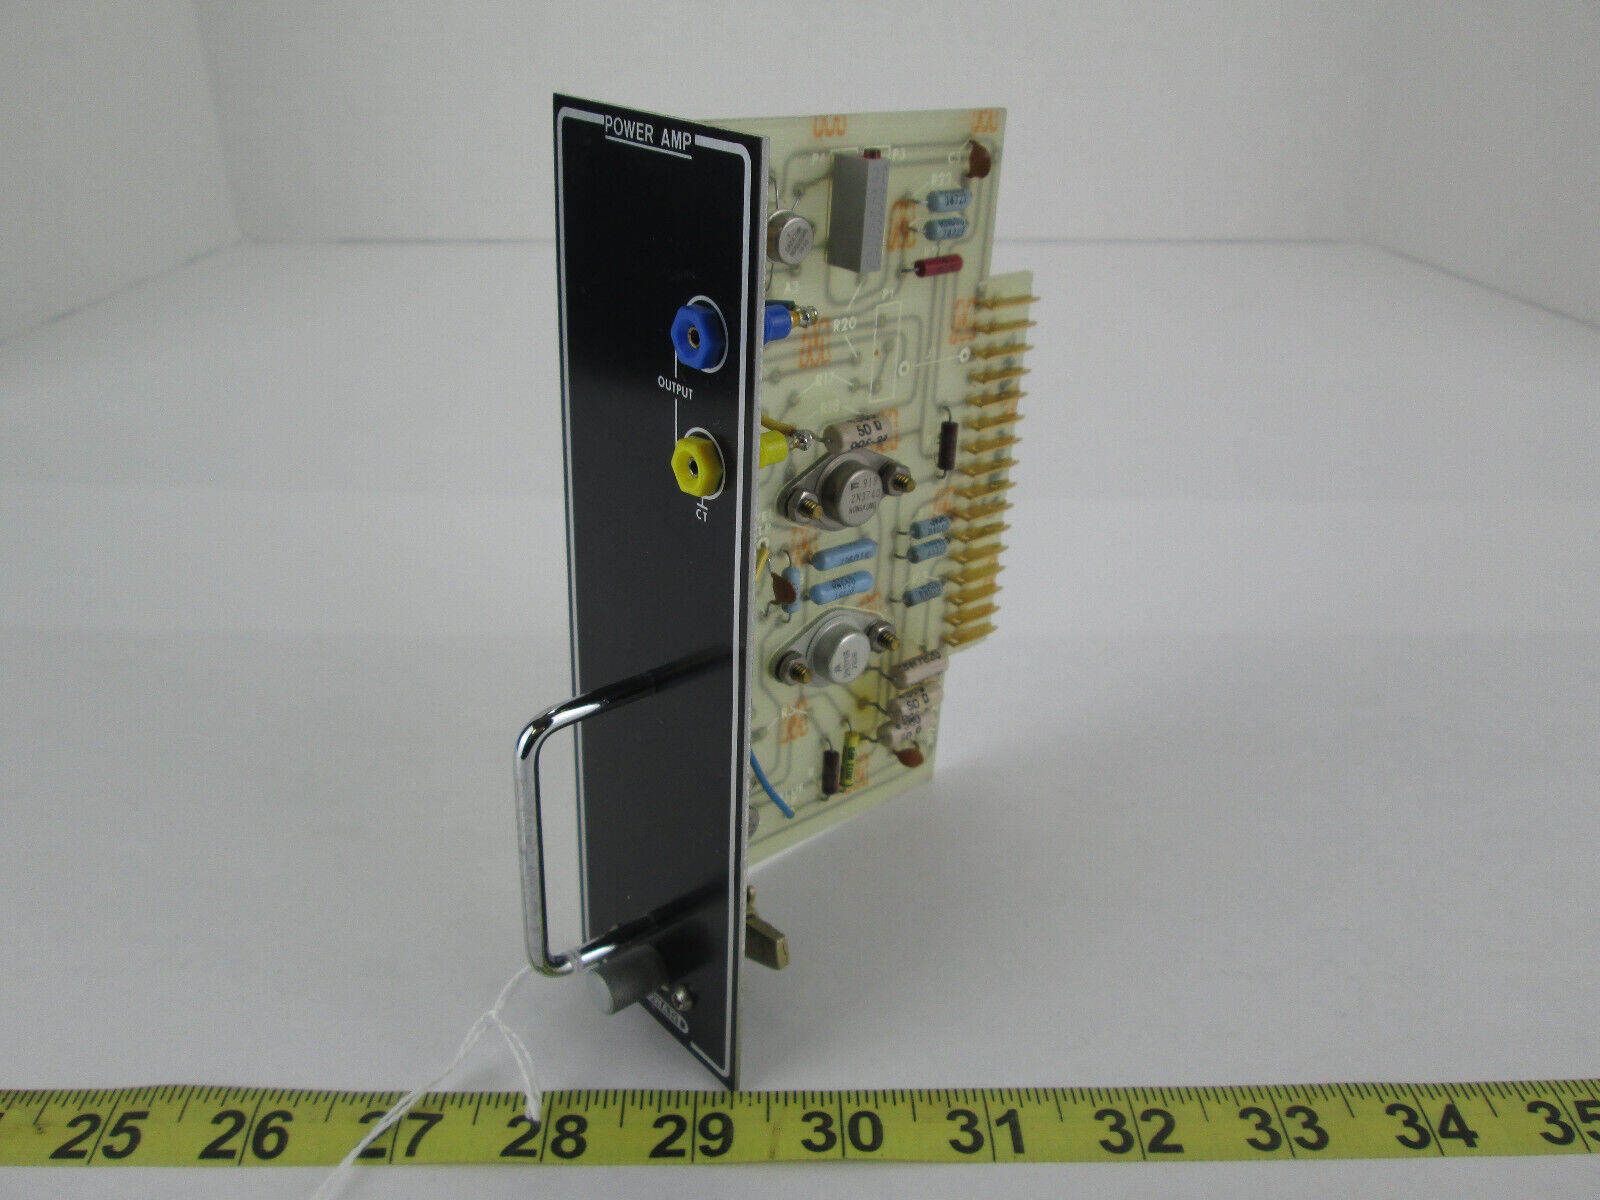 Woodward Power Amp Amplifier Electronic Circuit Board Panel Controls 3073-236B